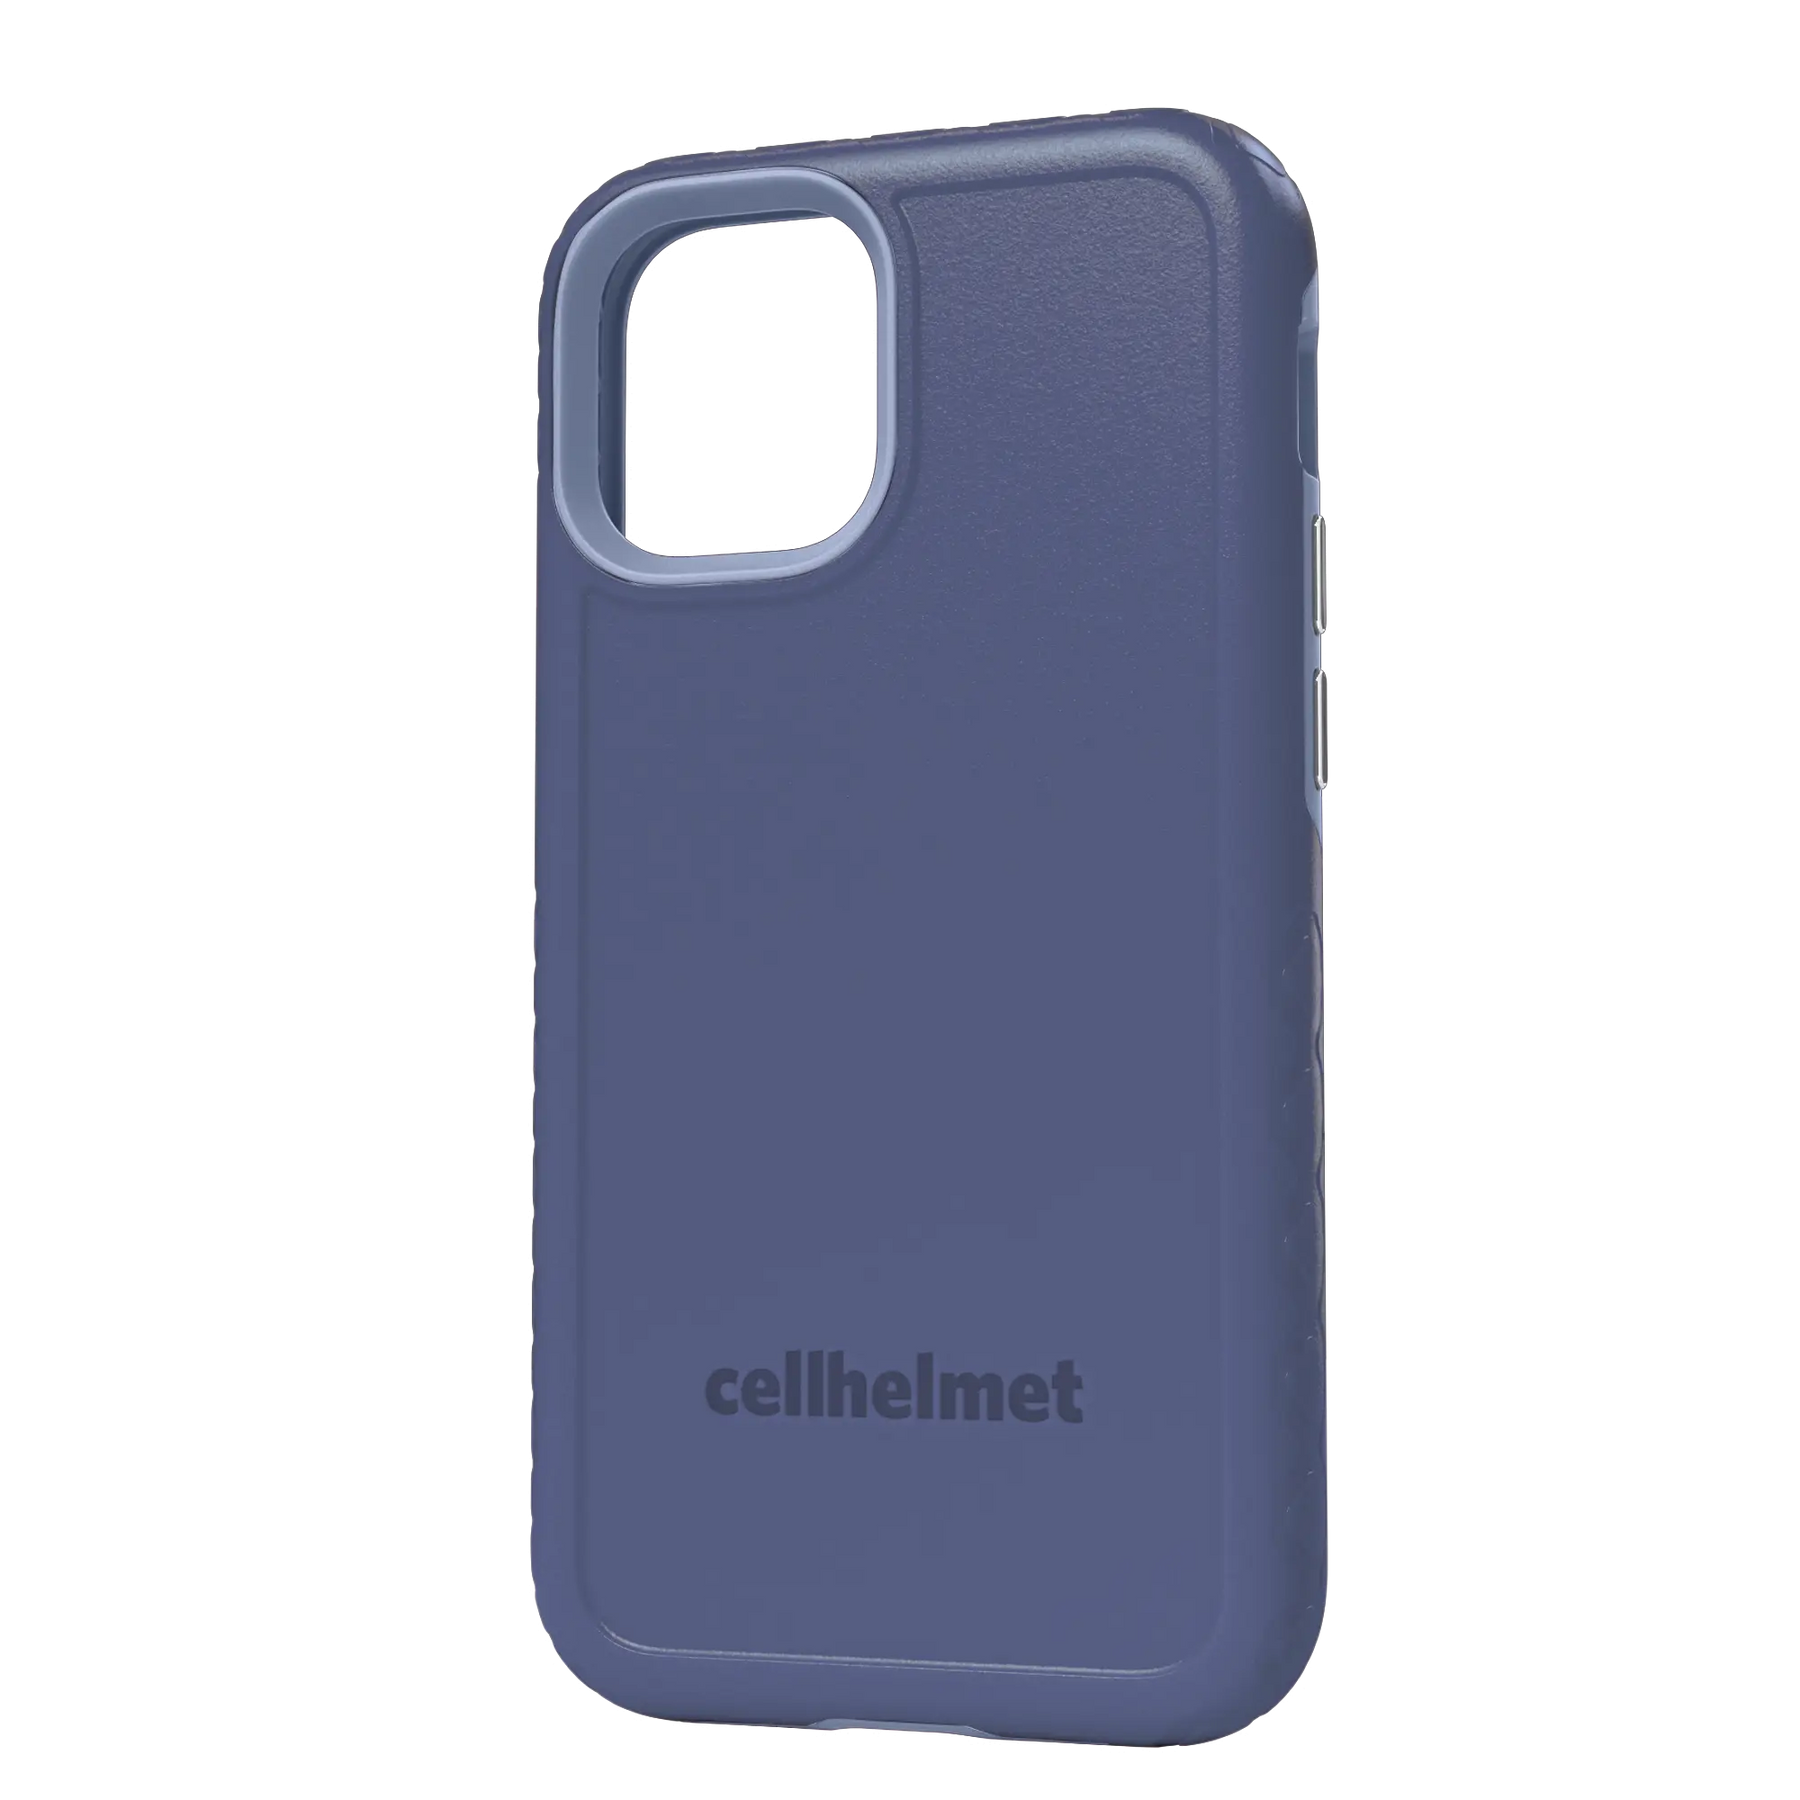 Blue cellhelmet Personalized Case for iPhone 12 Mini